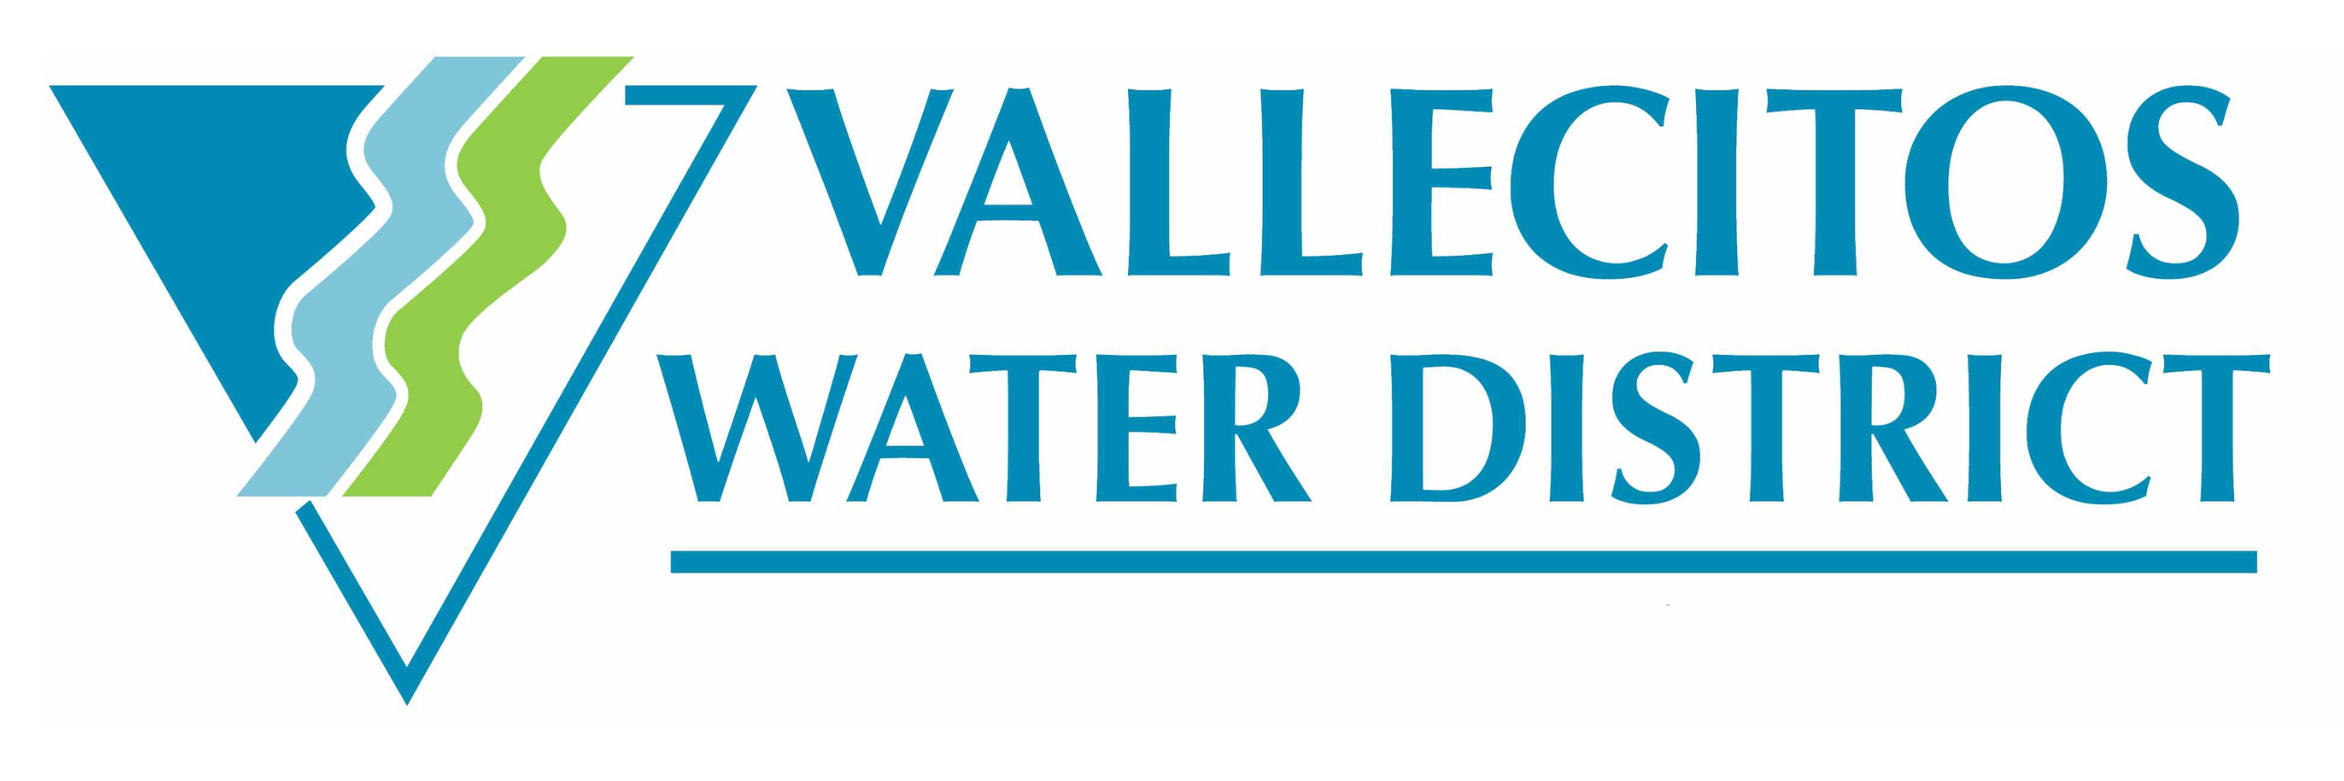 Valecitos Water District Logo.png